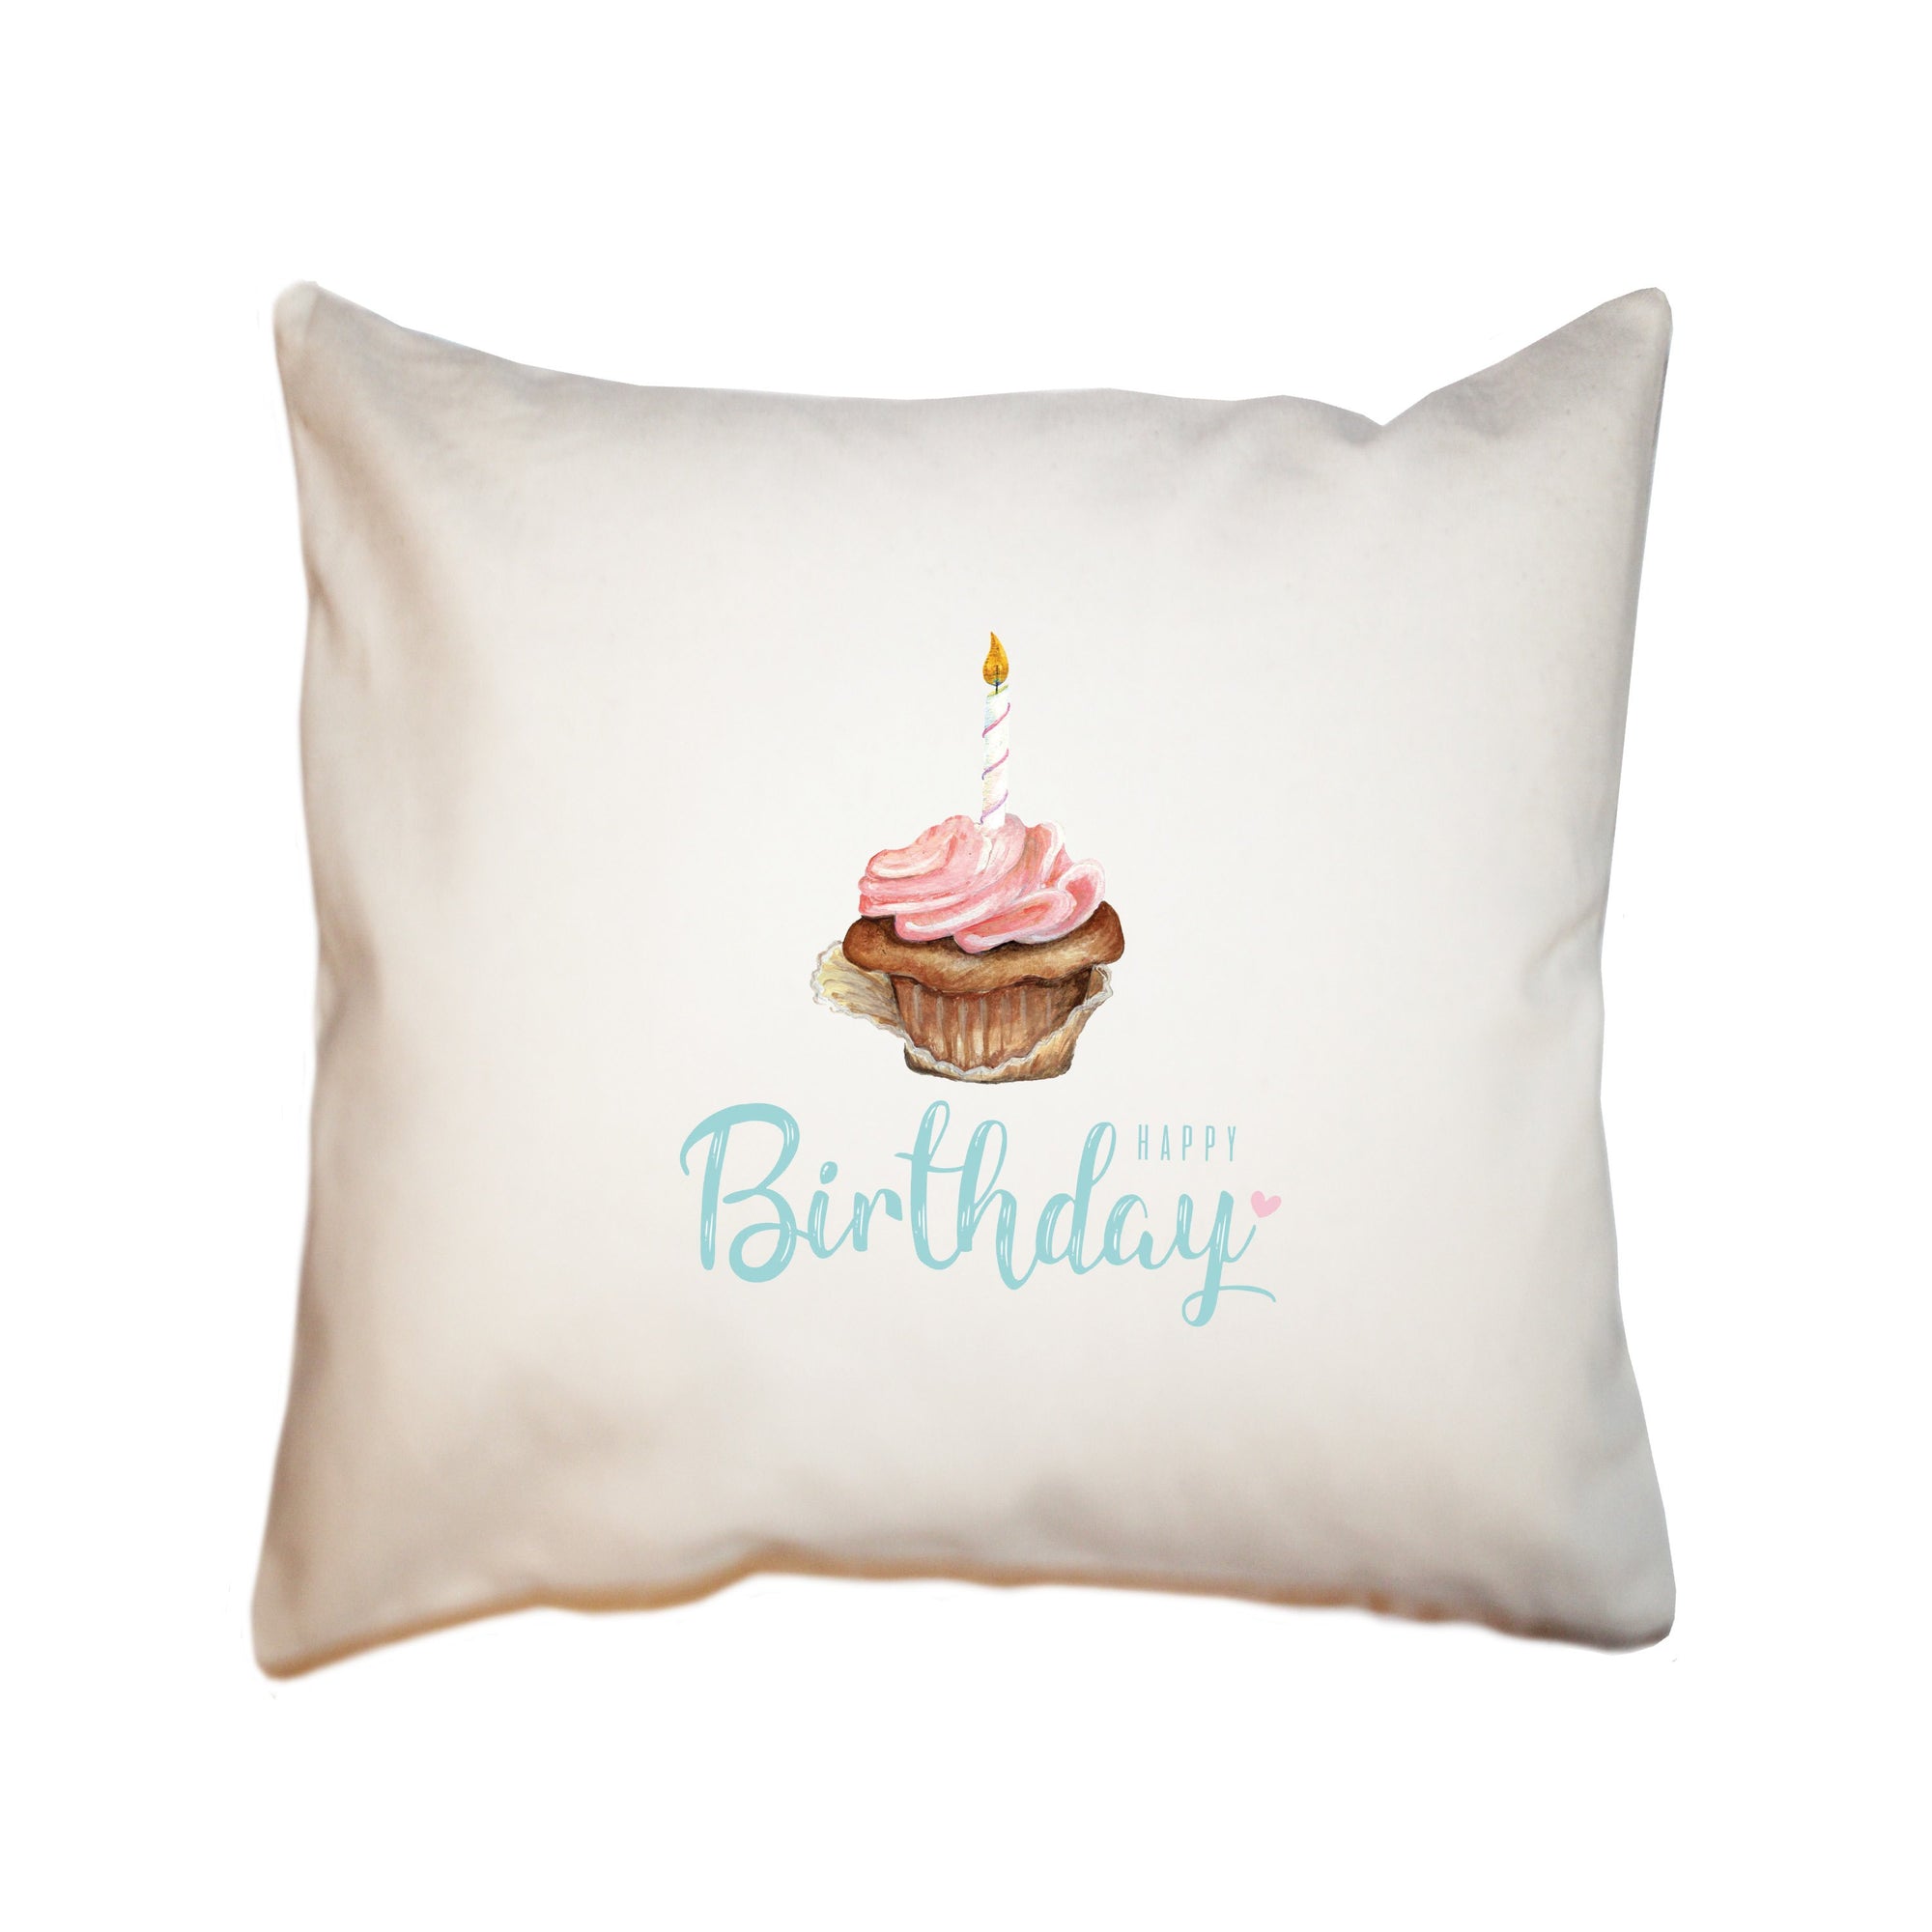 happy birthday square pillow